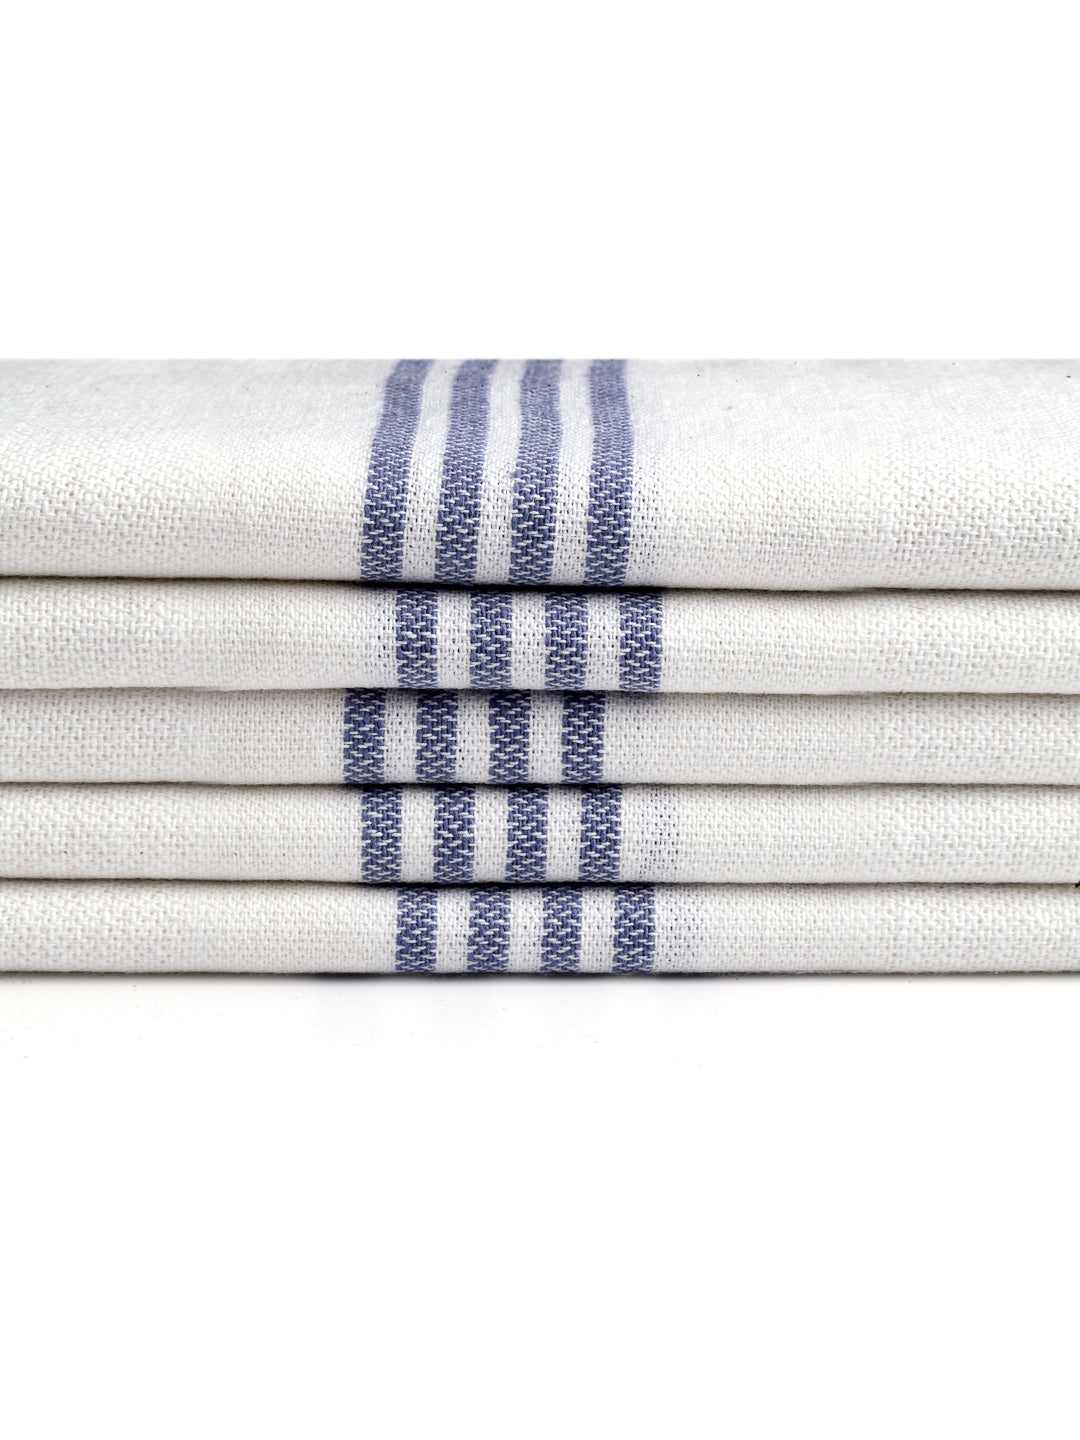 Arrabi Blue Solid Handwoven Cotton Hand Towel (Set of 5) (90 X 35 cm)